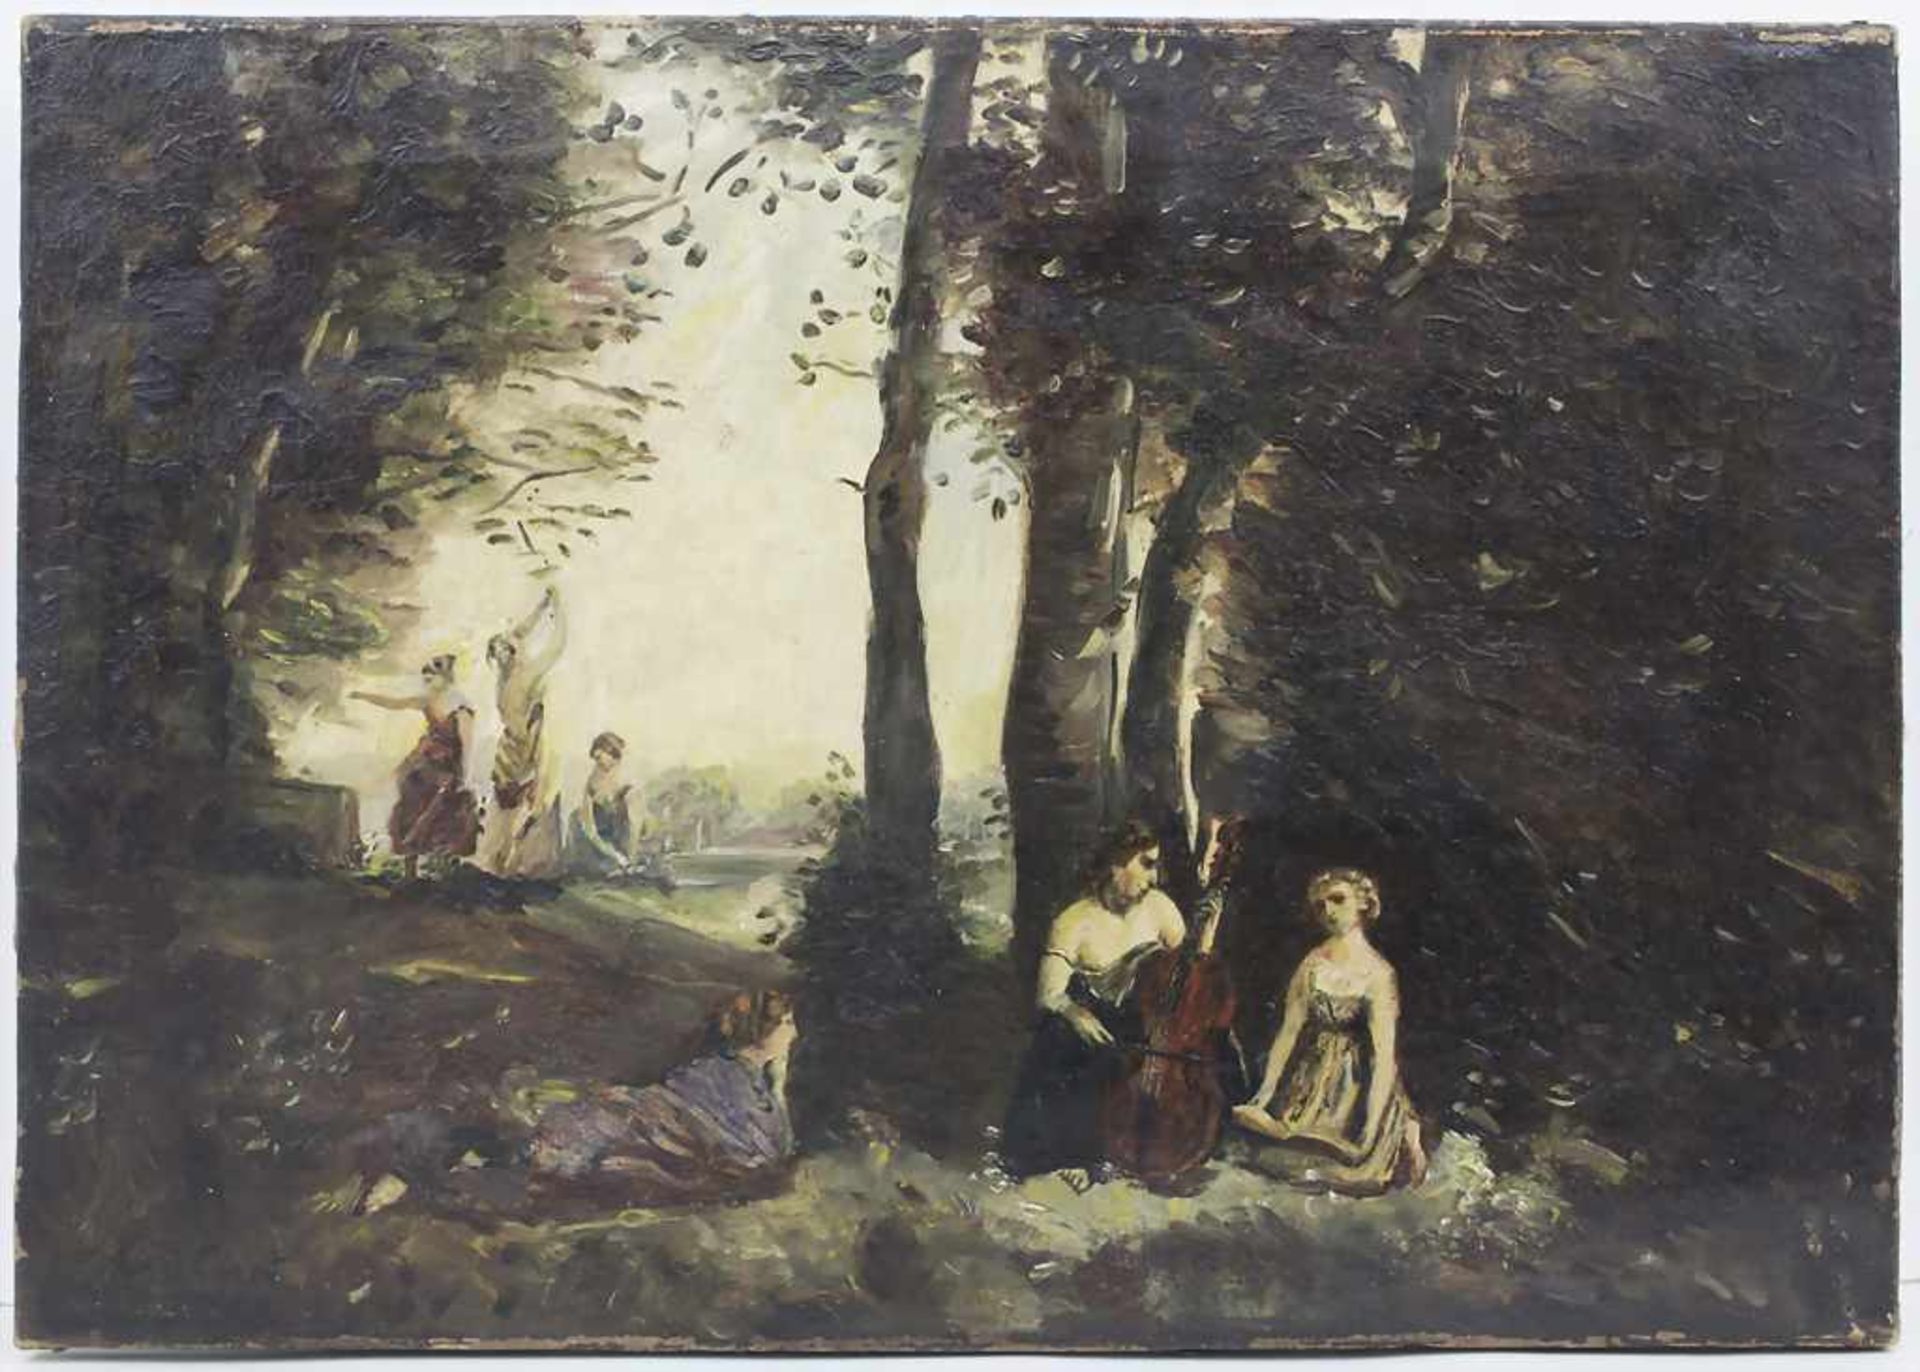 C.J. Corot (19. Jh.), 'Picknick im Park' / 'A picnic in the park'